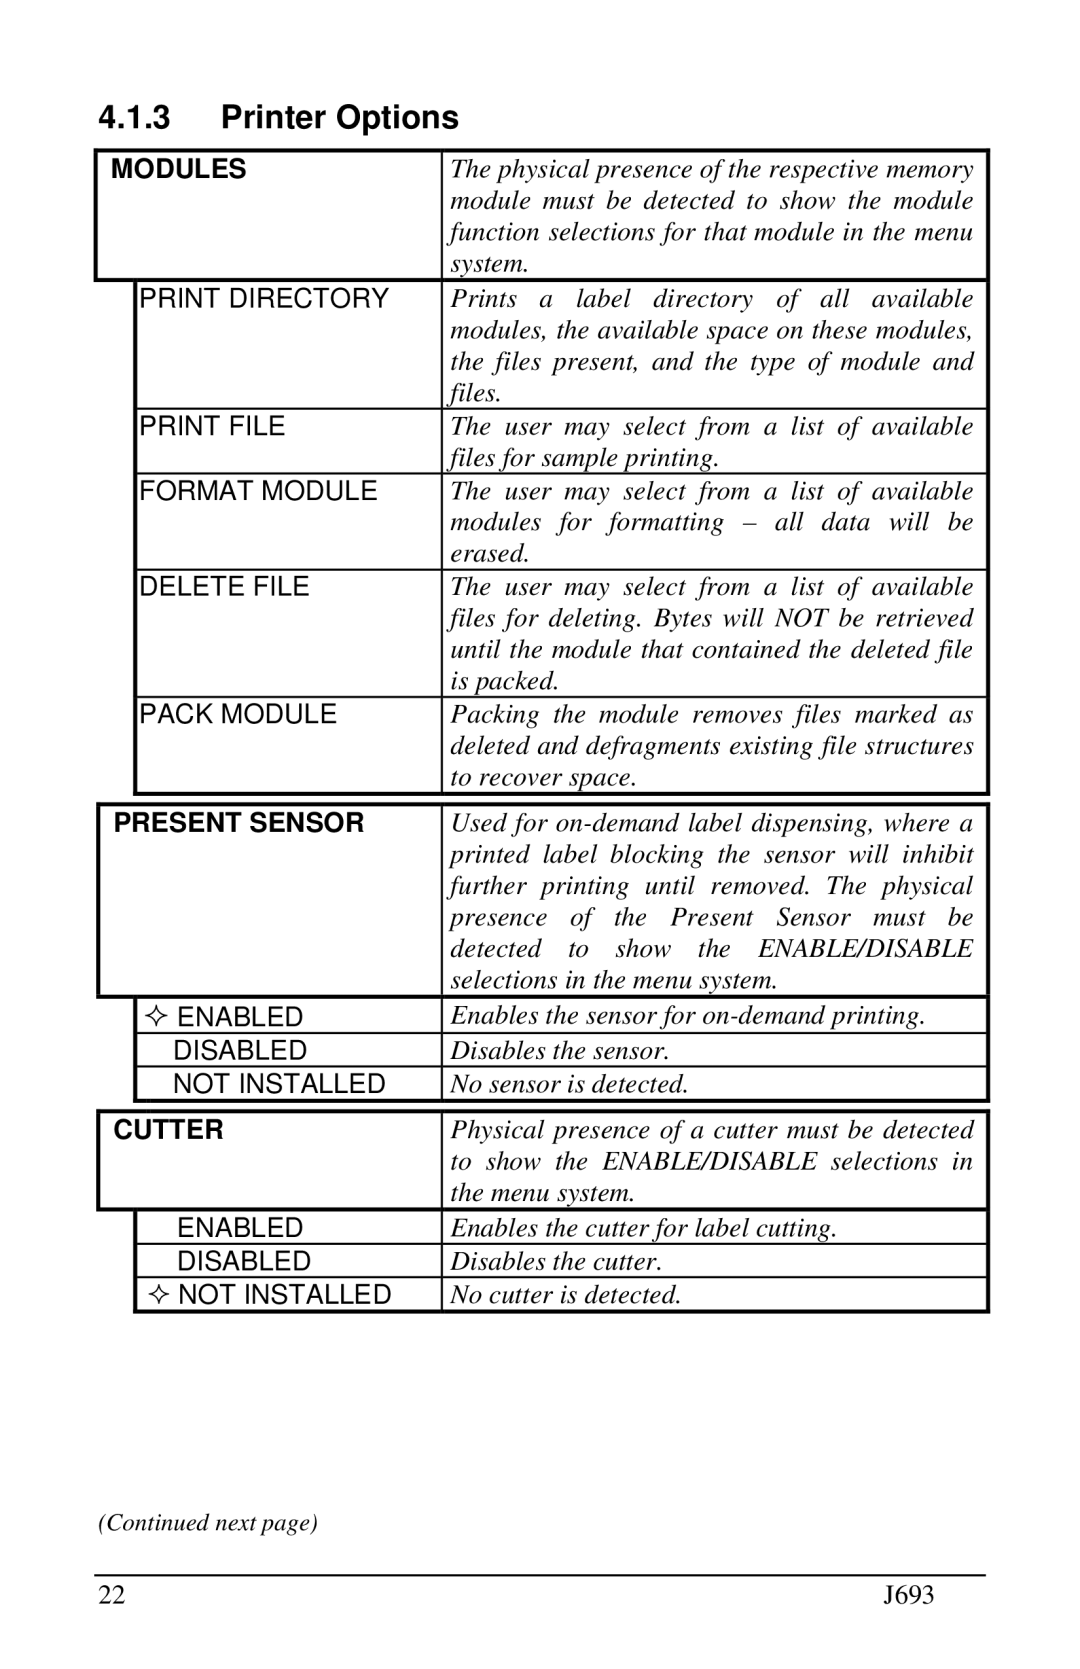 Pitney Bowes J693 manual 4.1.3, Printer Options 